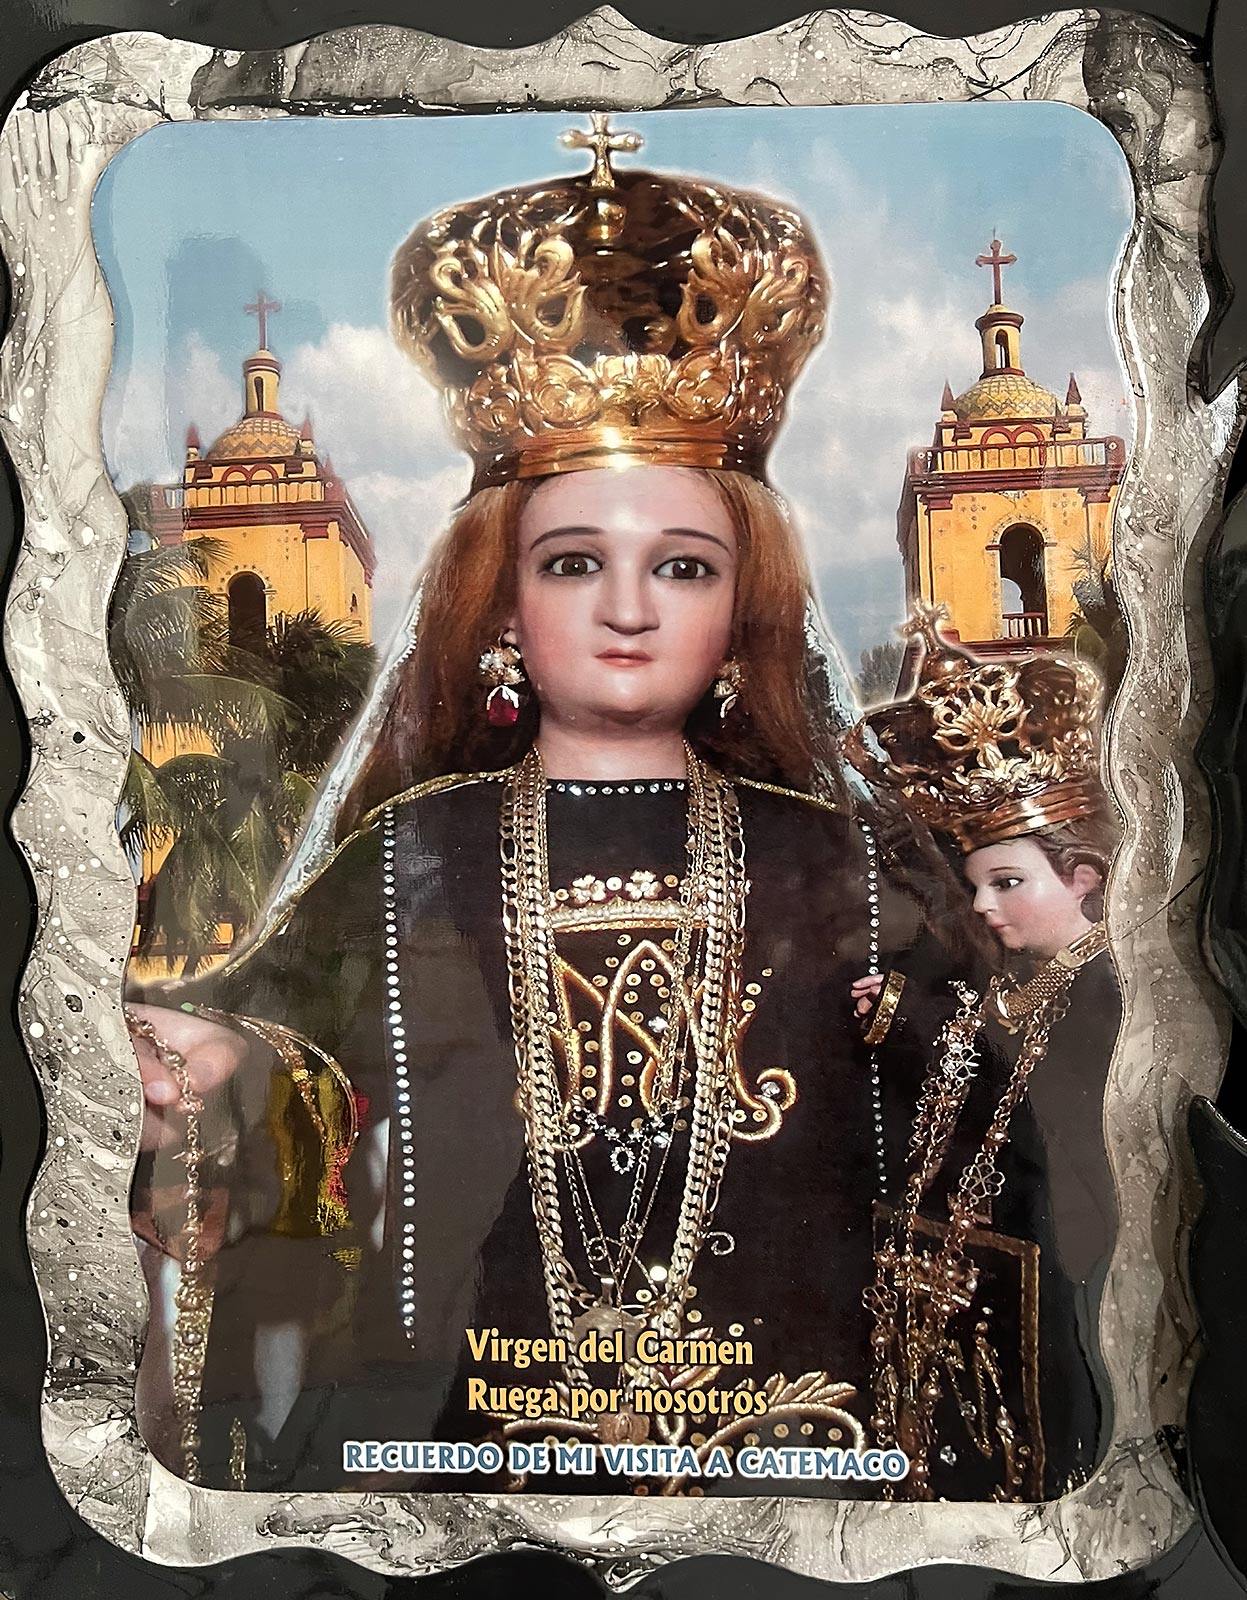 Pintura da estátua milagrosa de Maria segurando o menino Jesus, Santuário de Nuestra Senora del Carmen, Catemaco